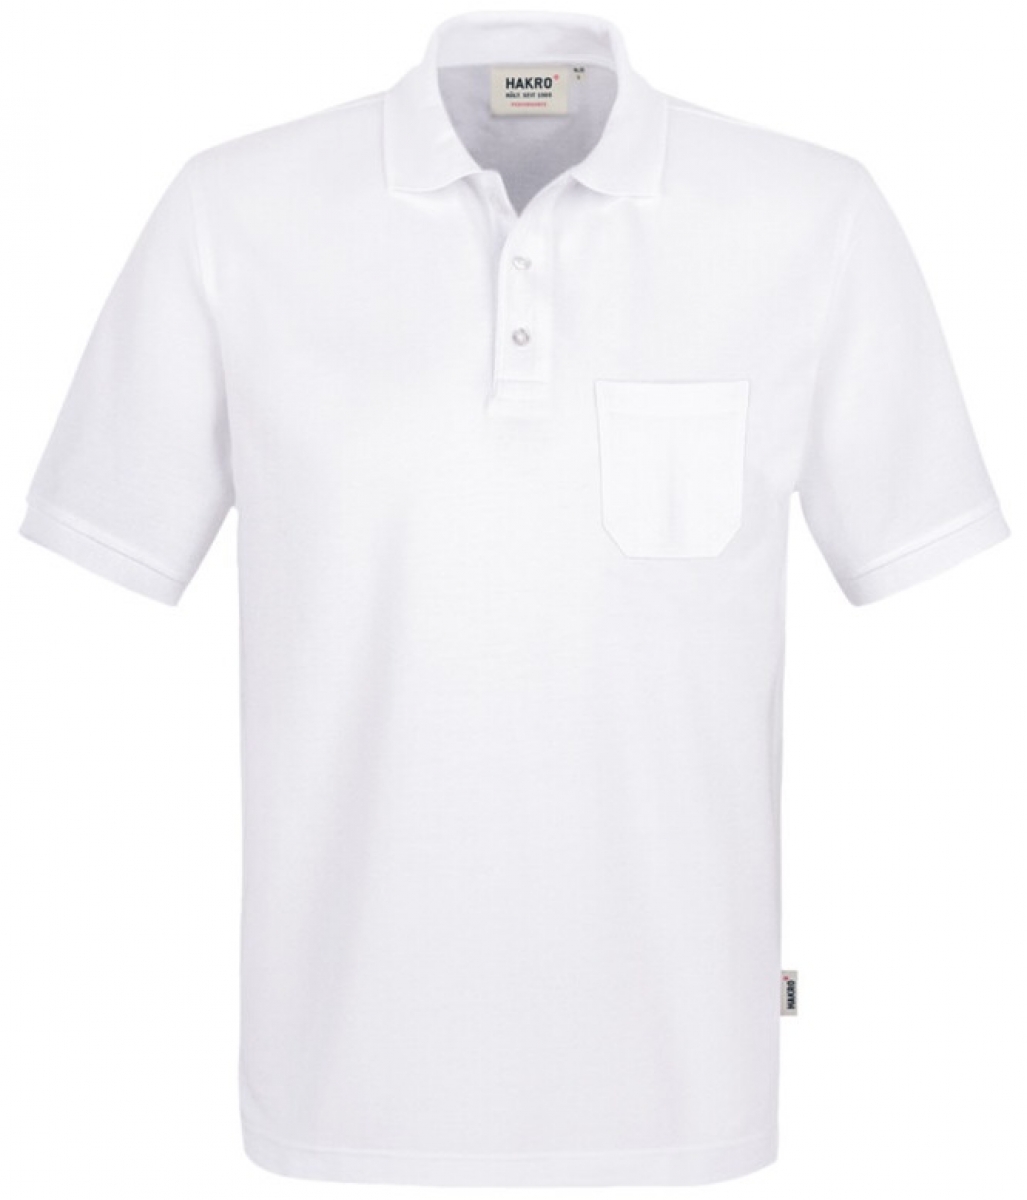 HAKRO-Worker-Shirts, Pocket-Poloshirt Performance, wei